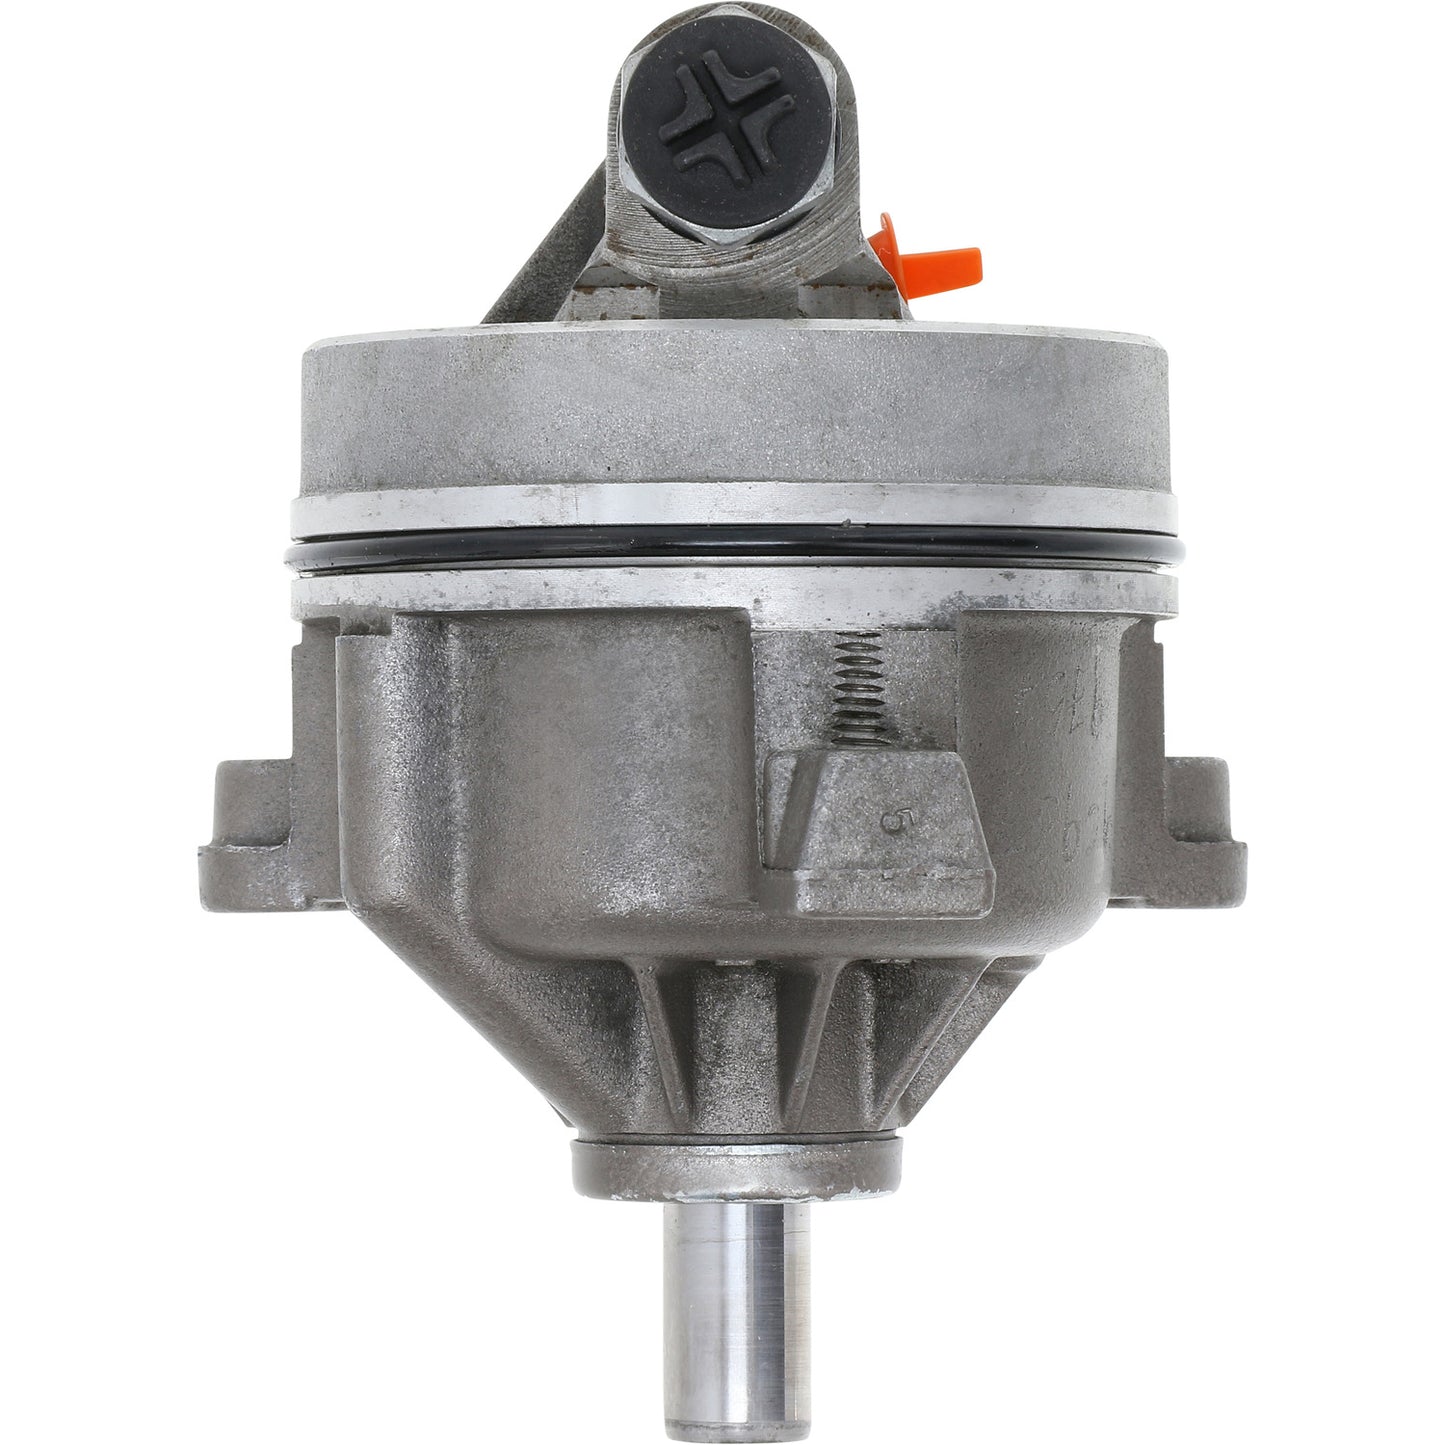 Power Steering Pump - MAVAL - Hydraulic Power - Remanufactured - 9757M